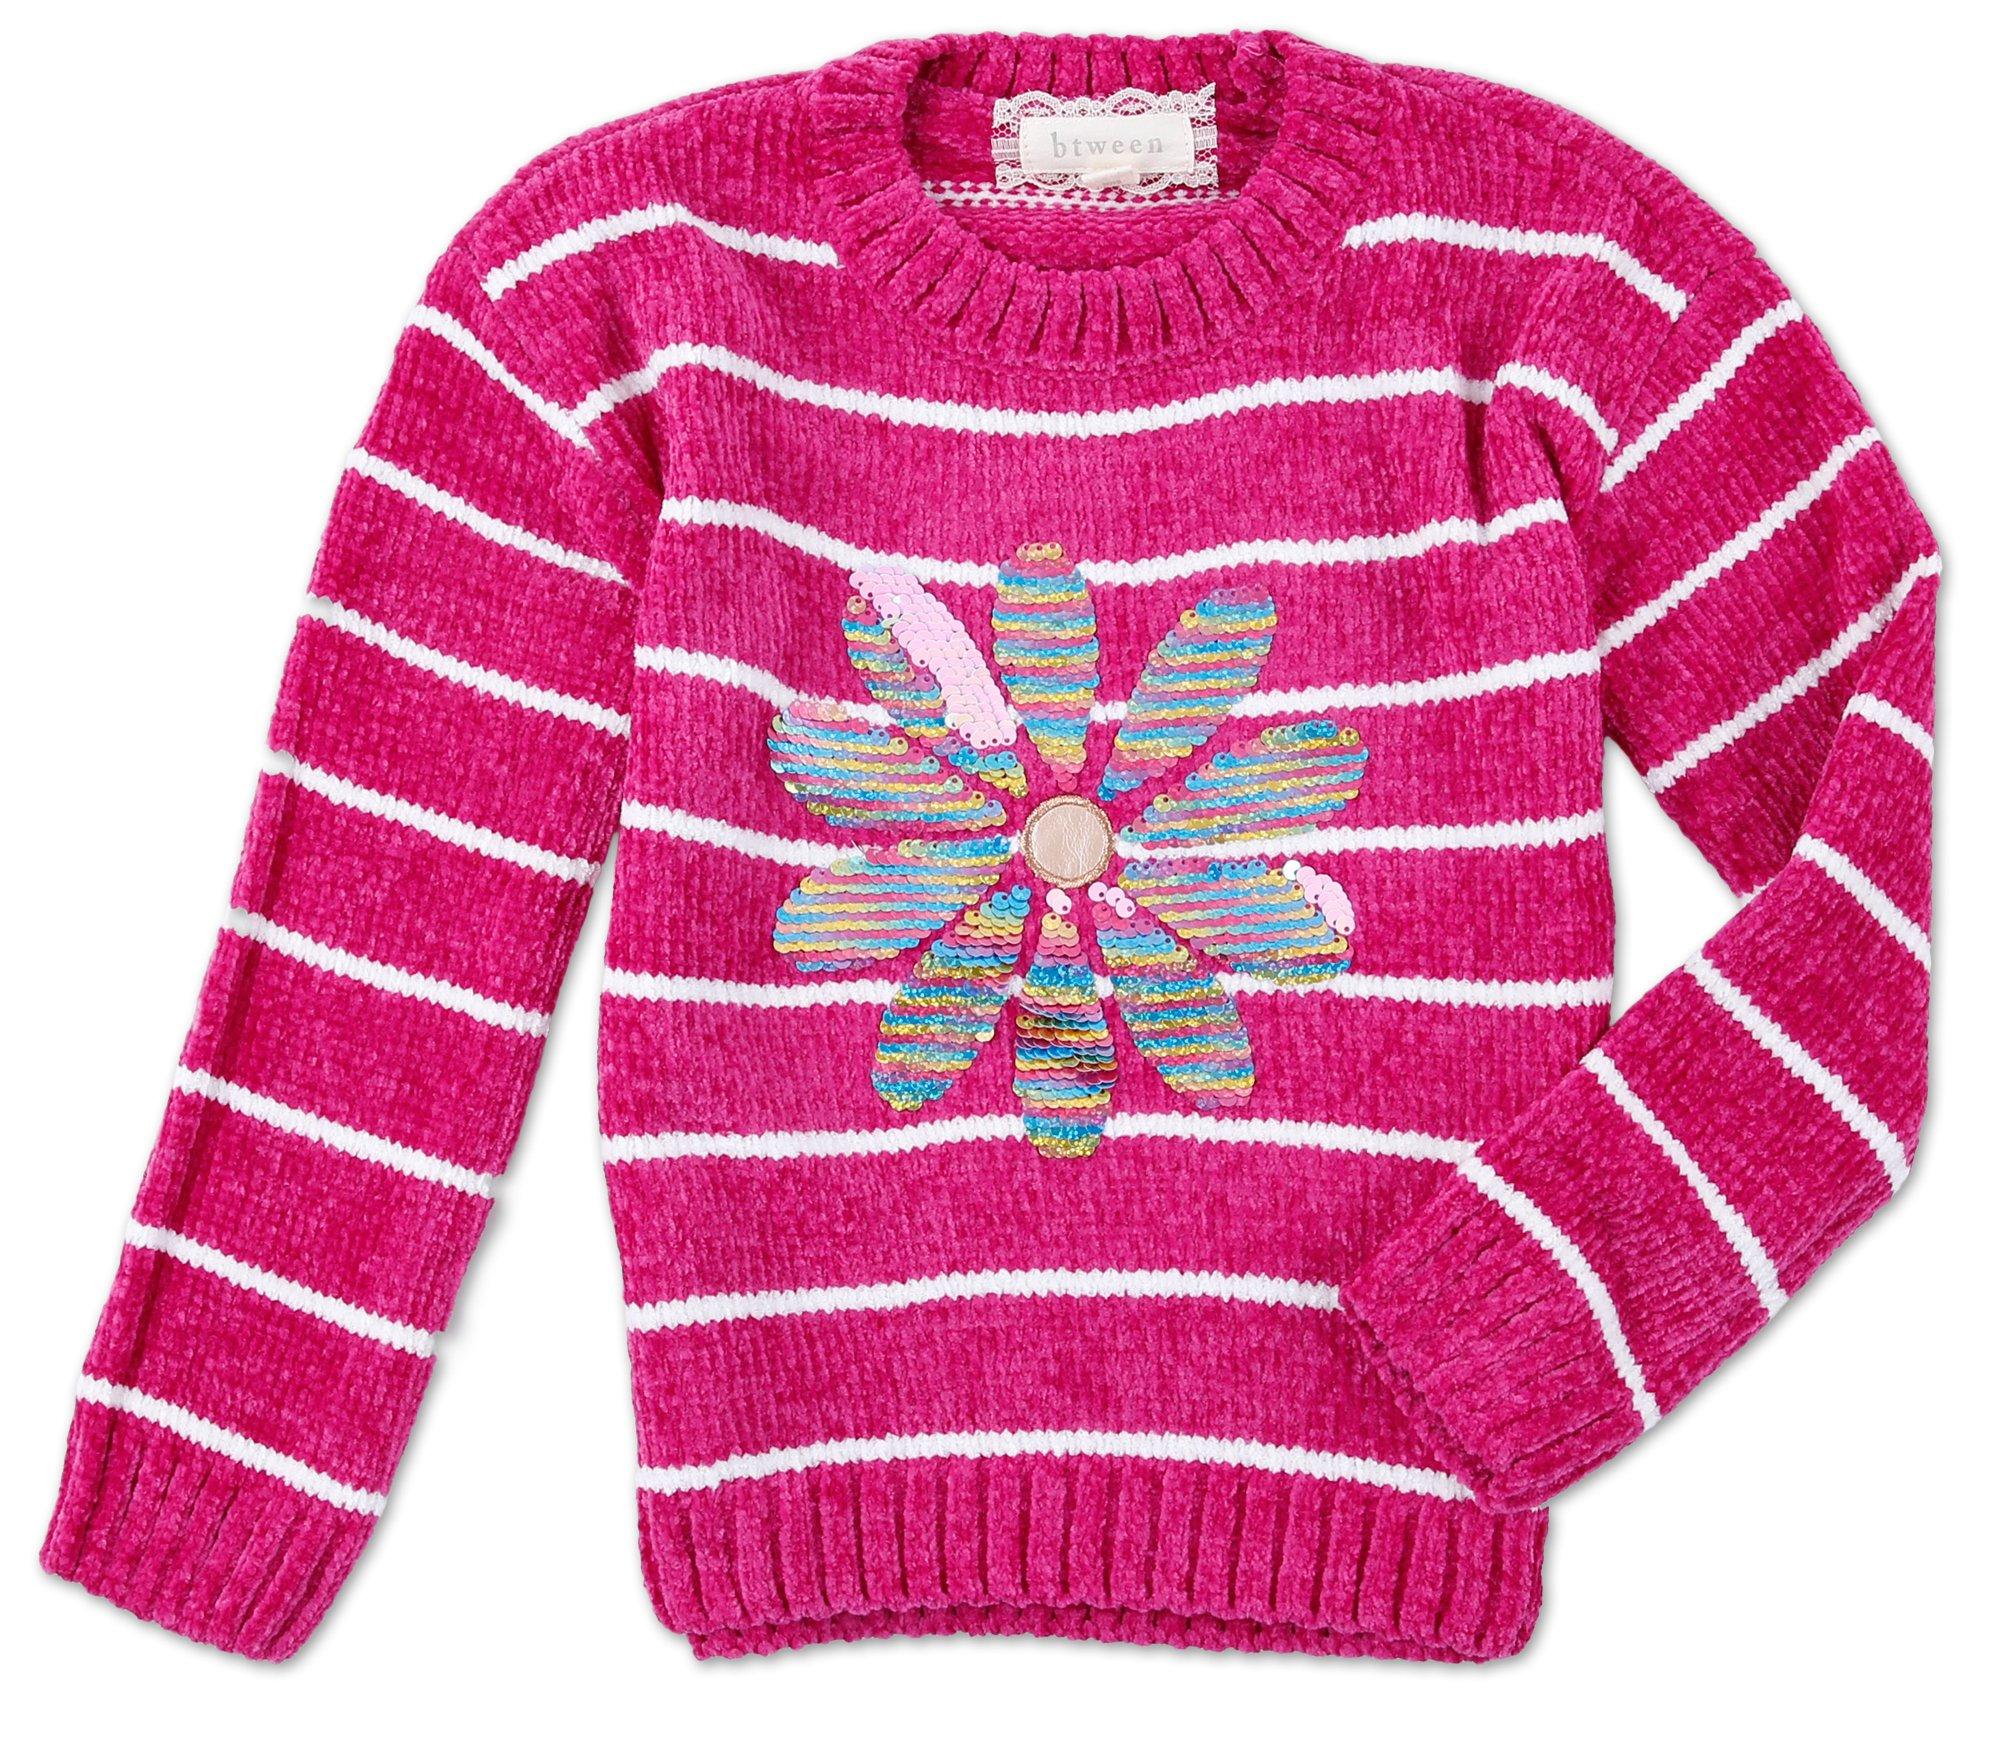 Little Girls Striped Sequin Flower Sweater